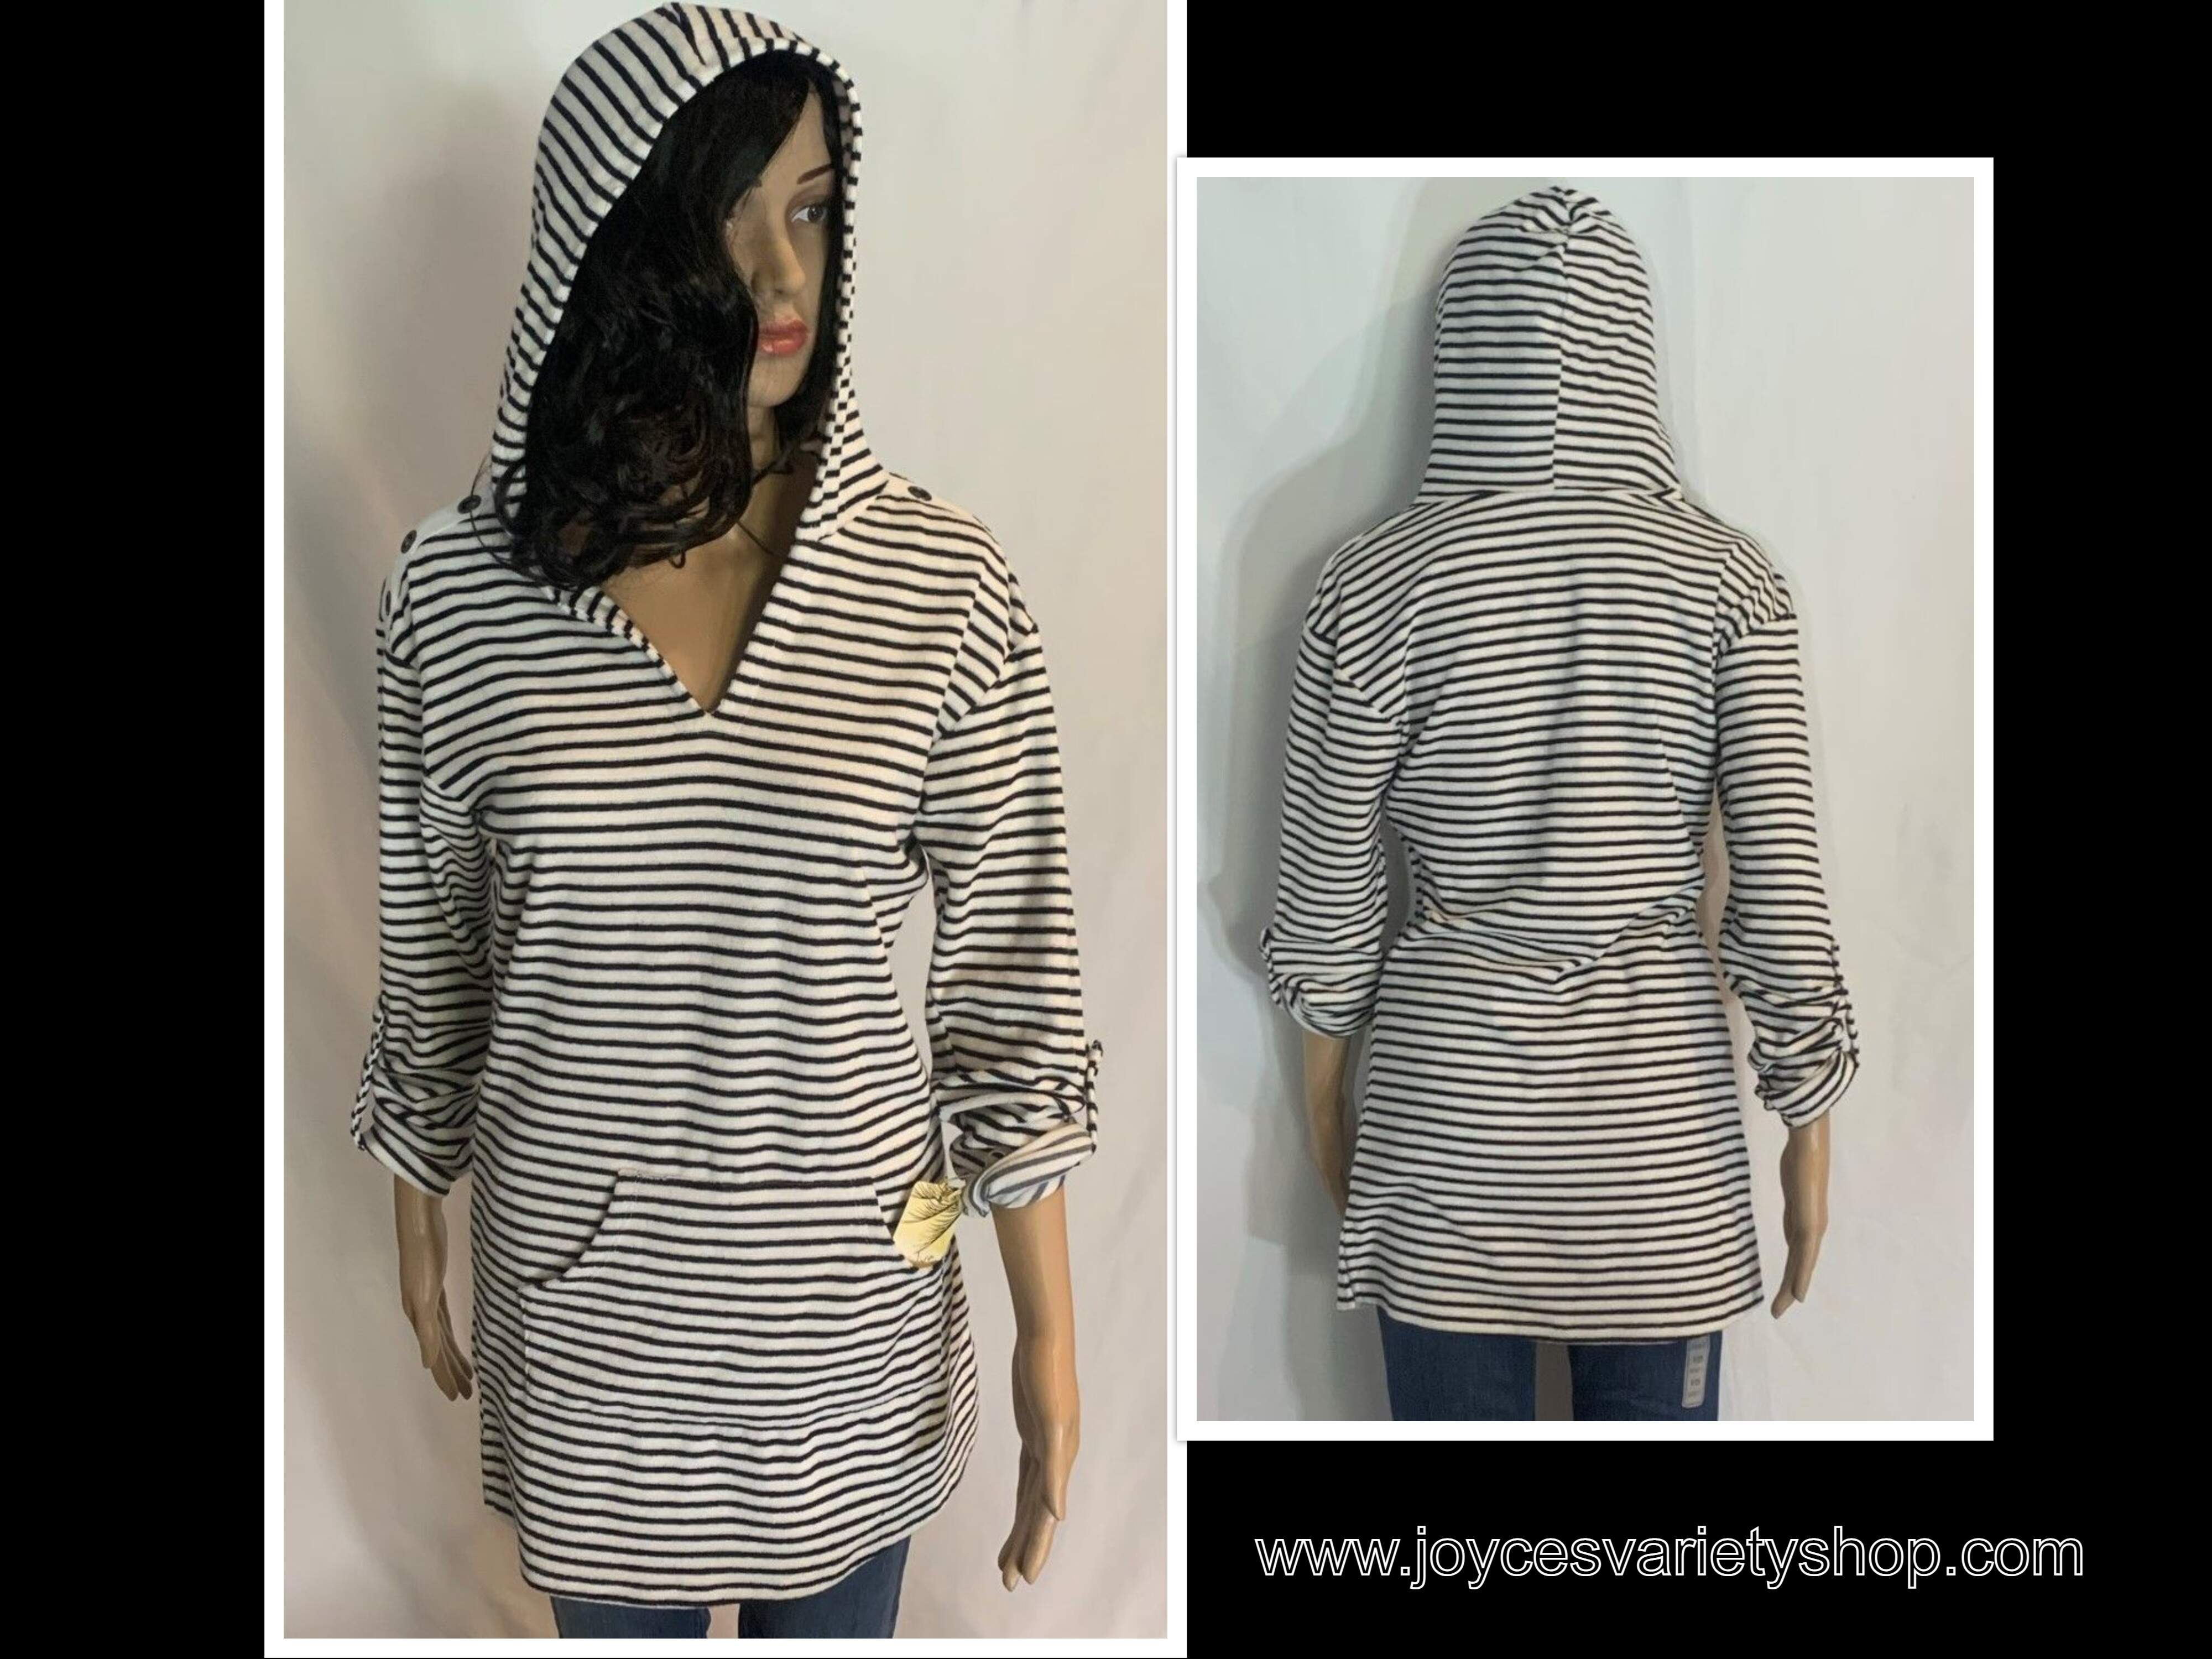 Hoodie Top T-Shirt Swim Cover Beachwear Black & White Striped SZ XS Sandiva